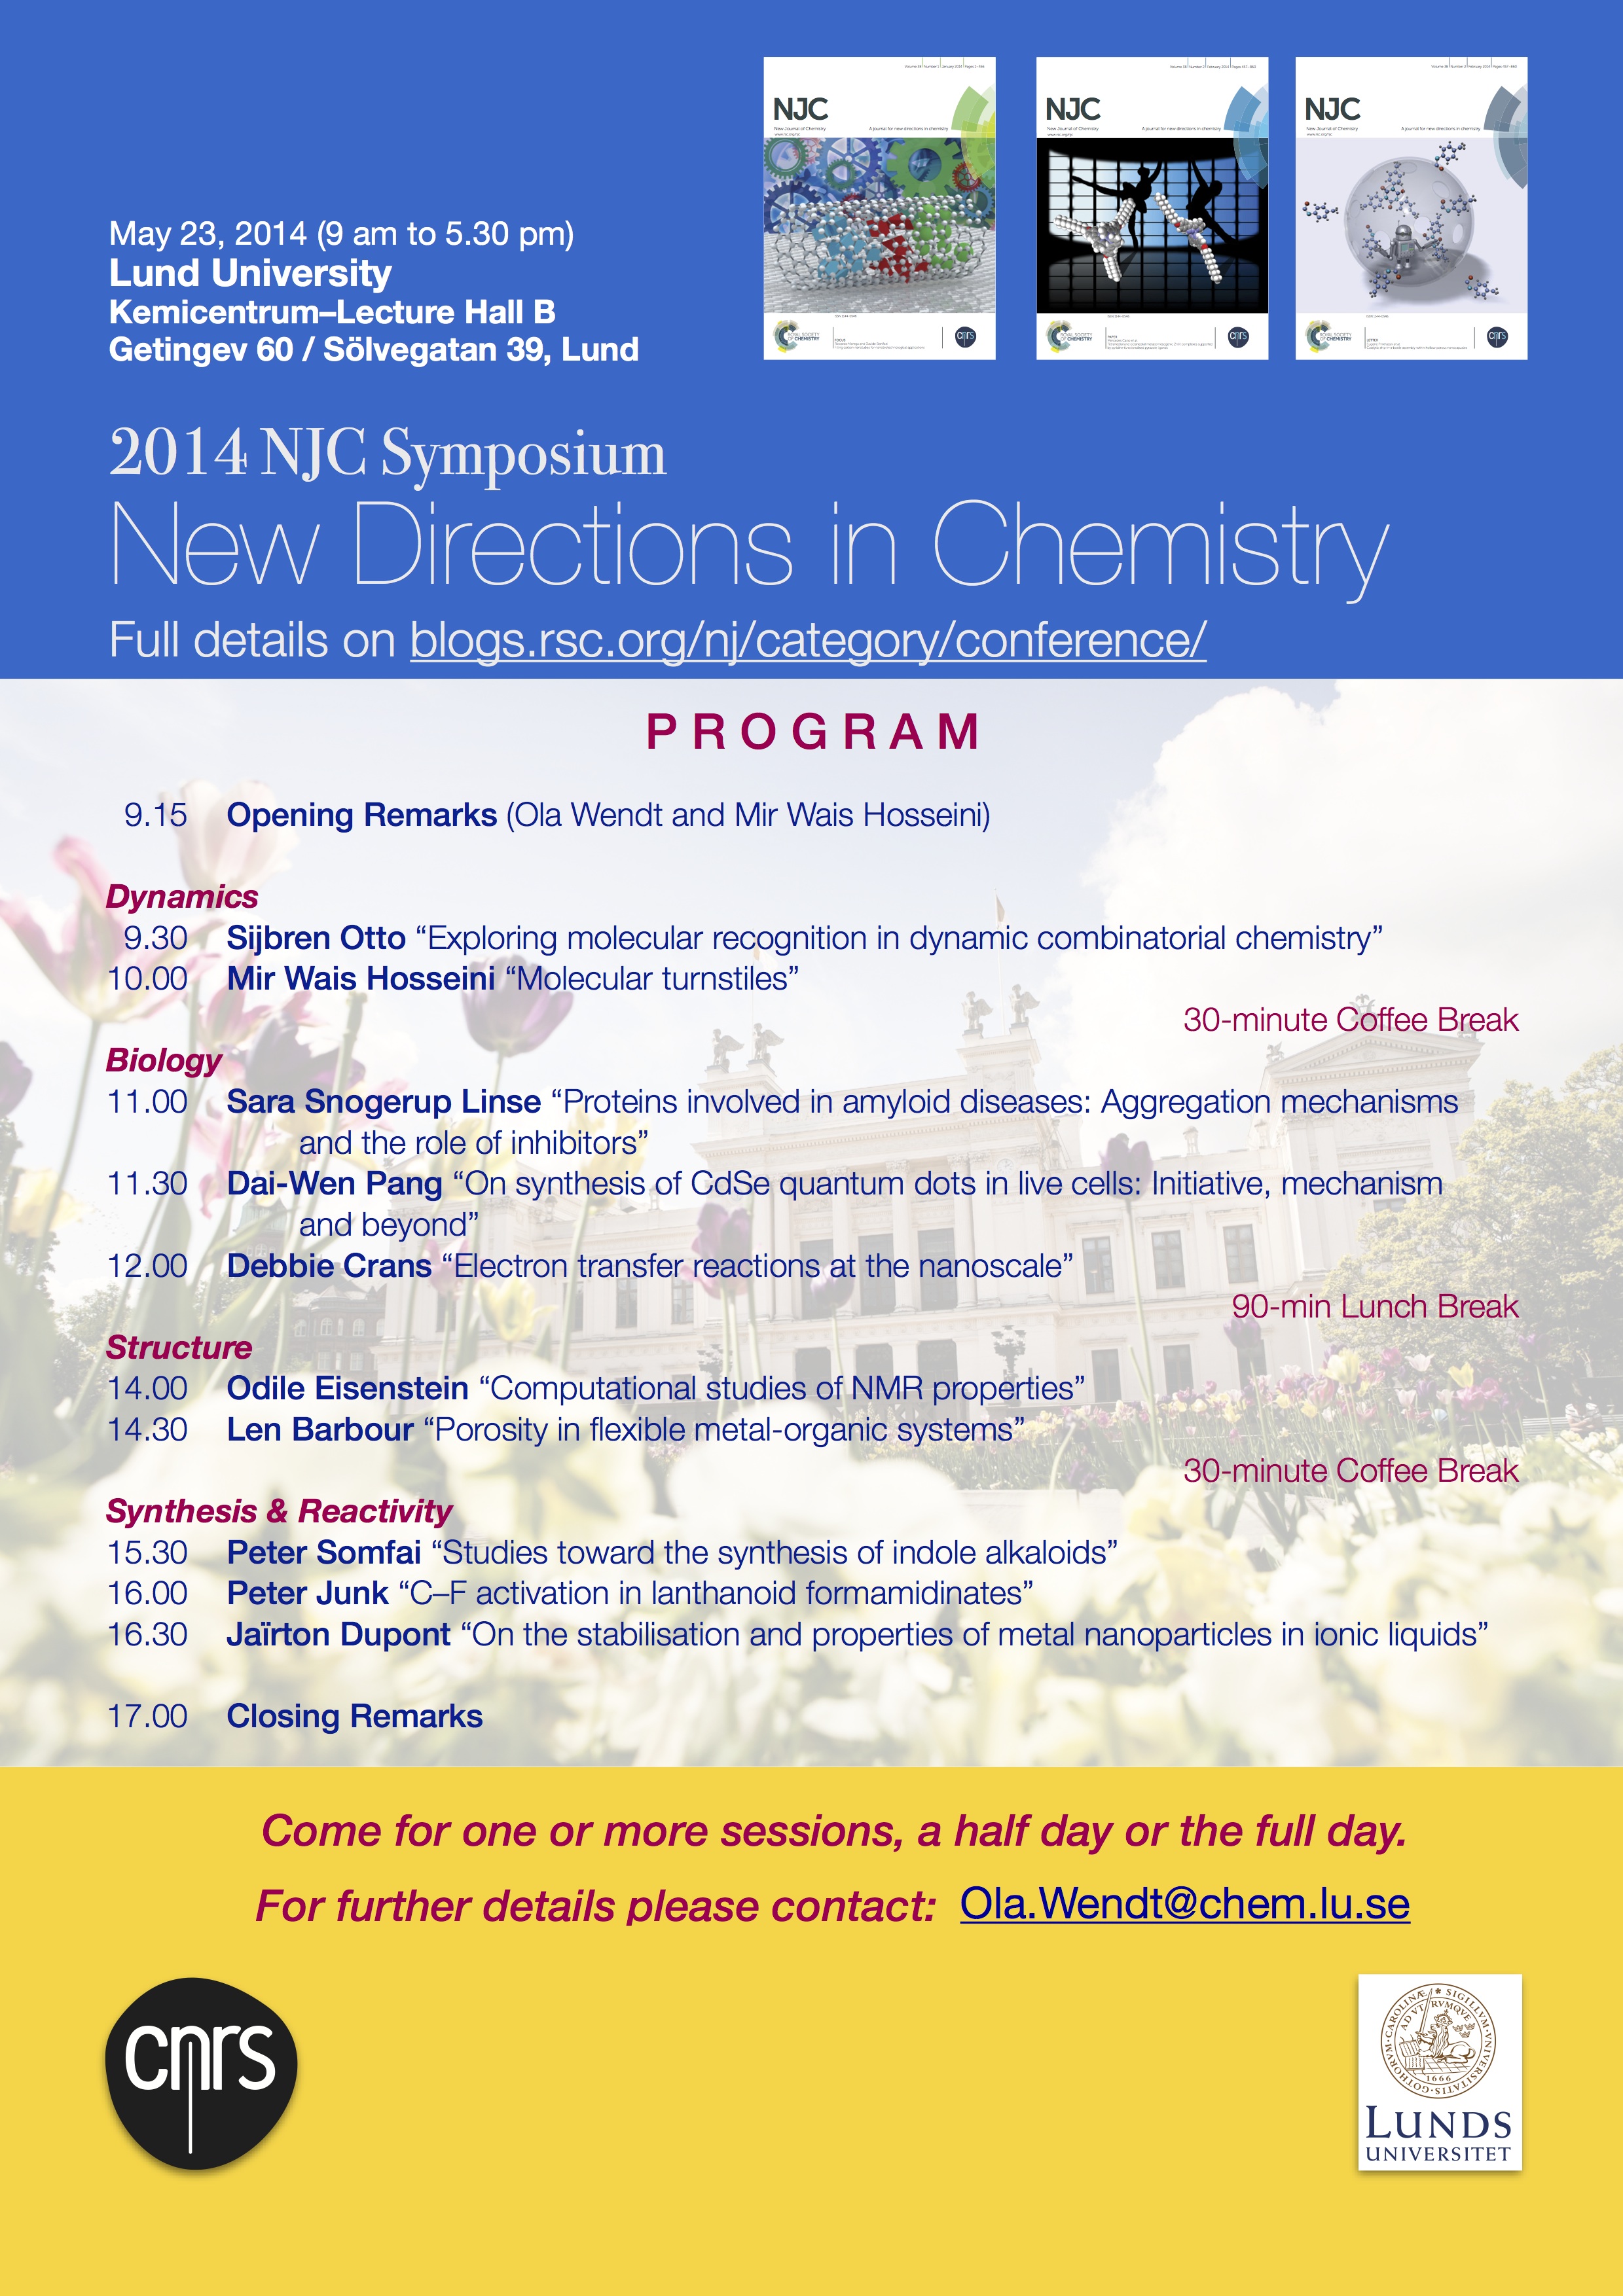 NJC Symposium at Lund University on May 23, 2014